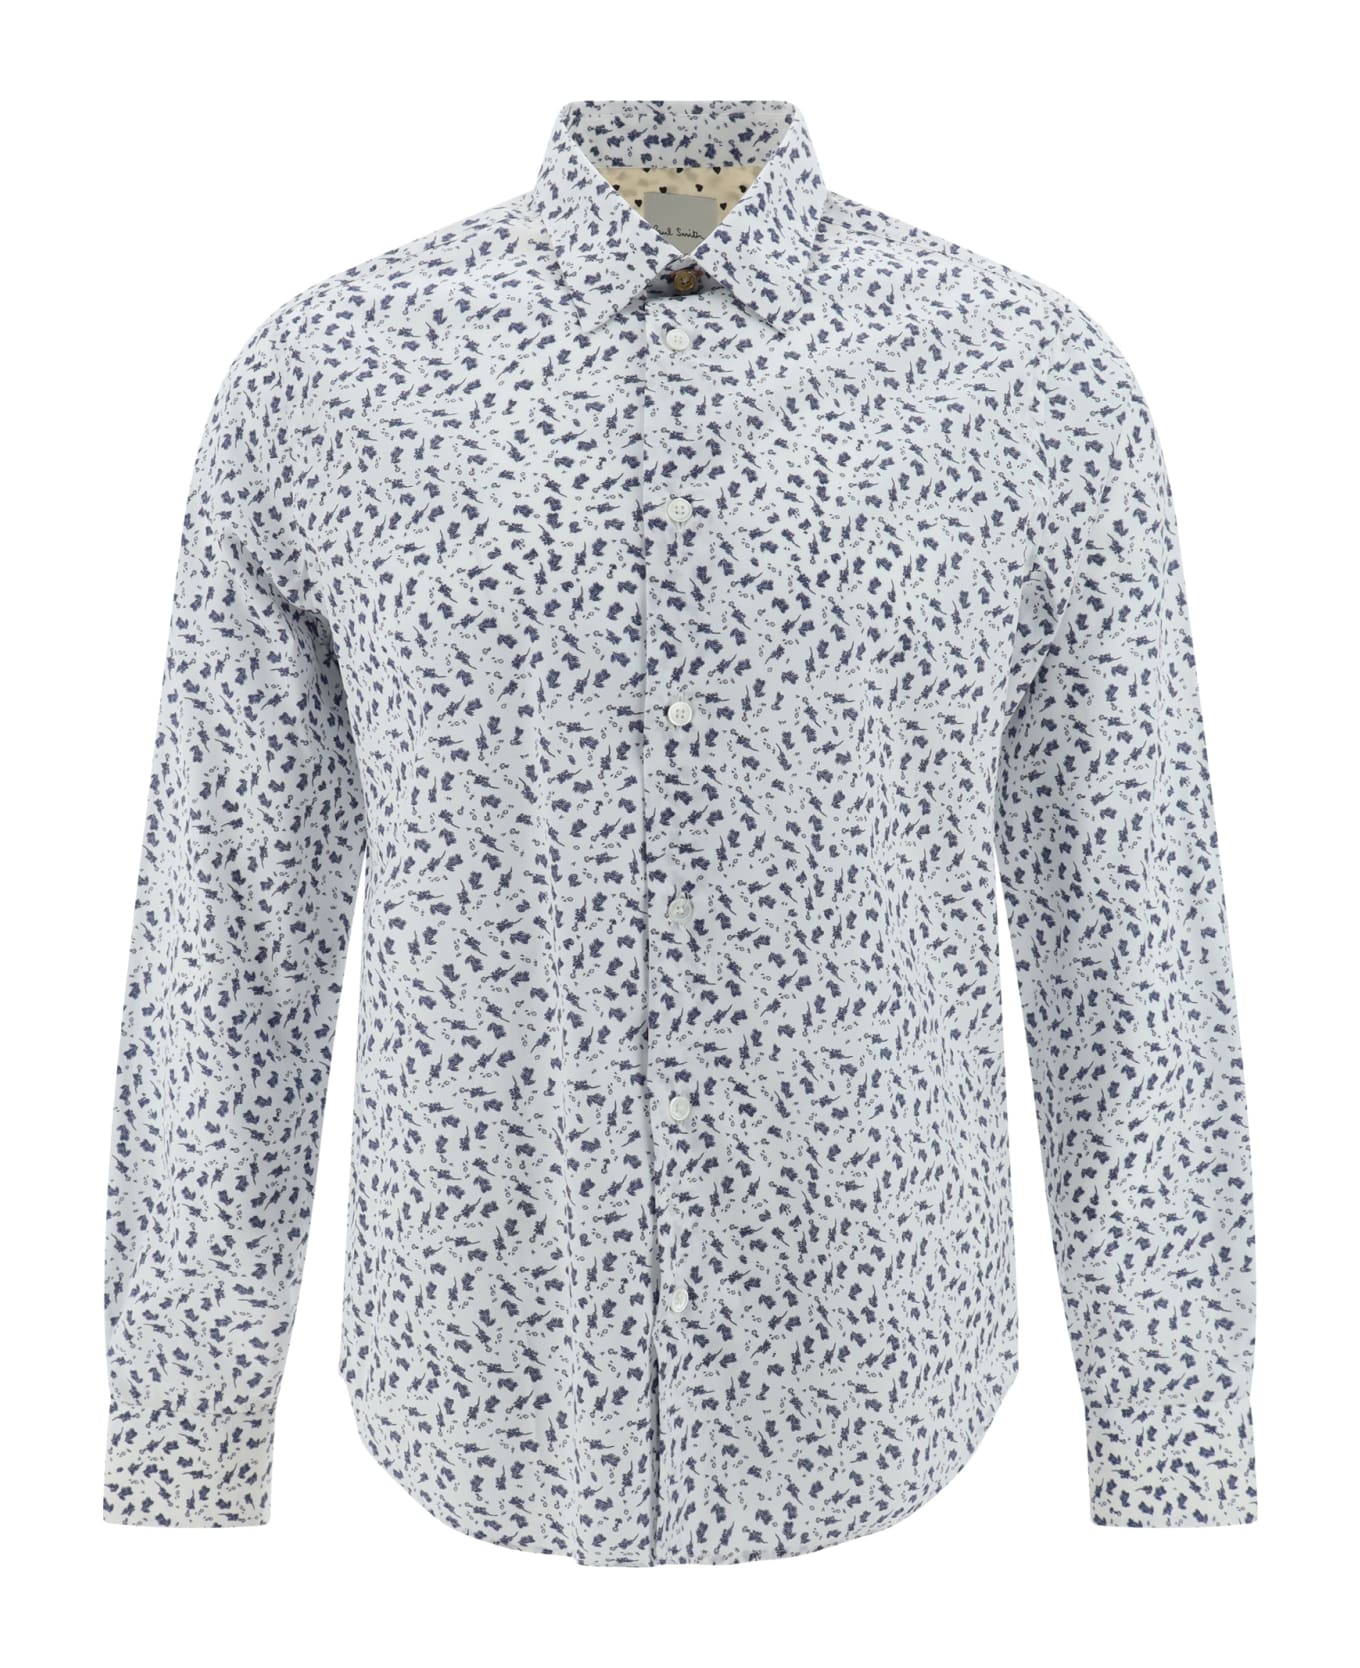 Paul Smith Shirt - White シャツ